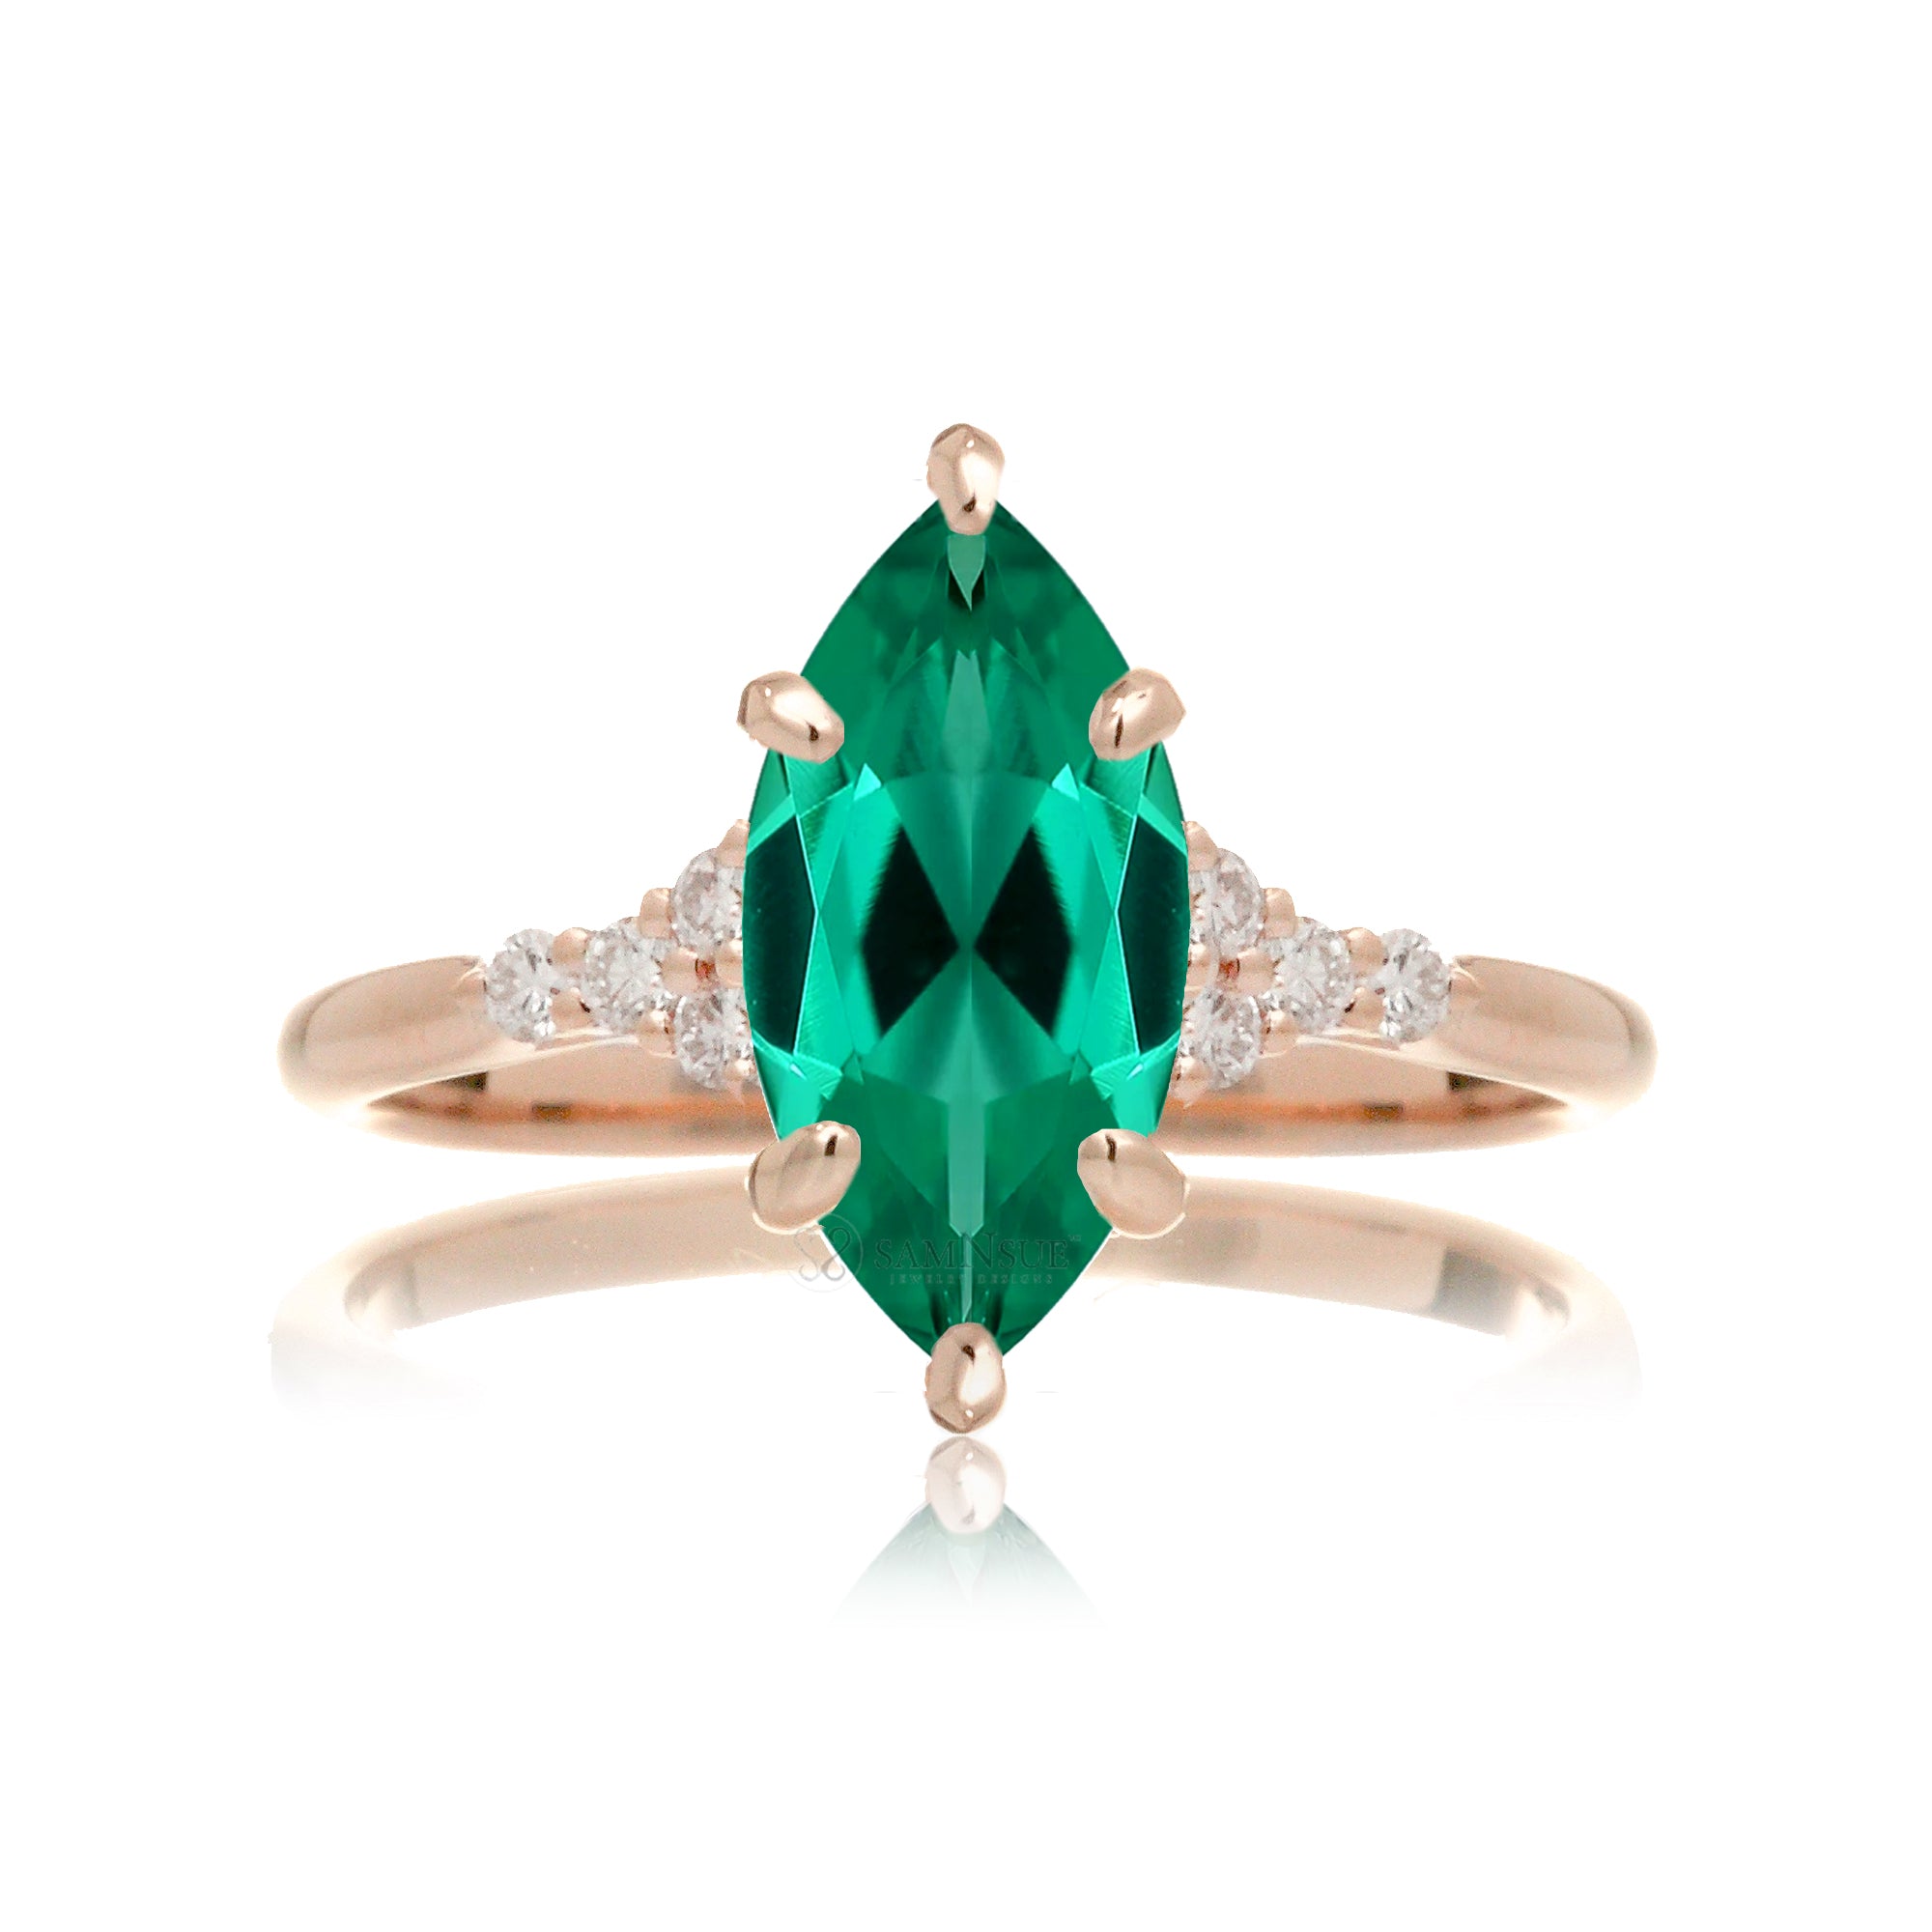 The Chloe Marquise Cut Emerald Ring